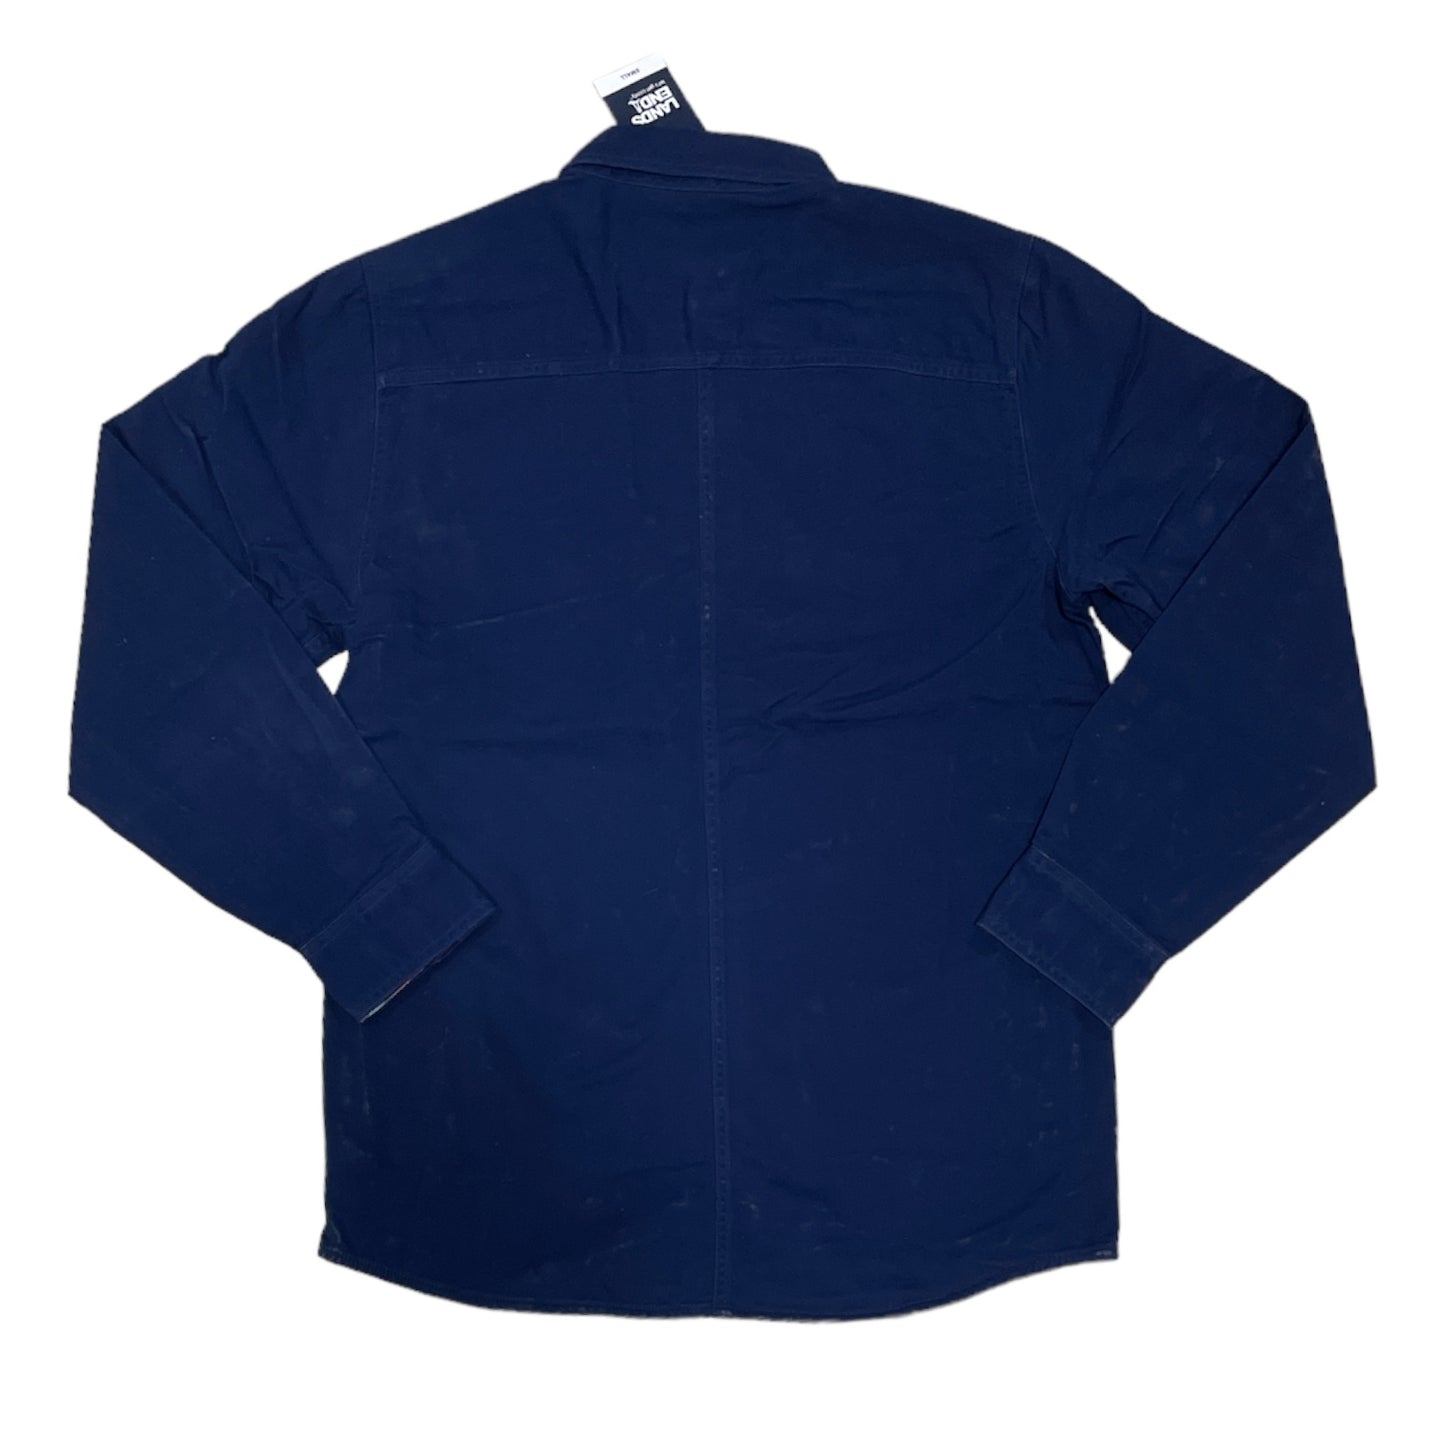 Land's End Men's Flannel Lined Long Sleeve Work Shirt Jacket